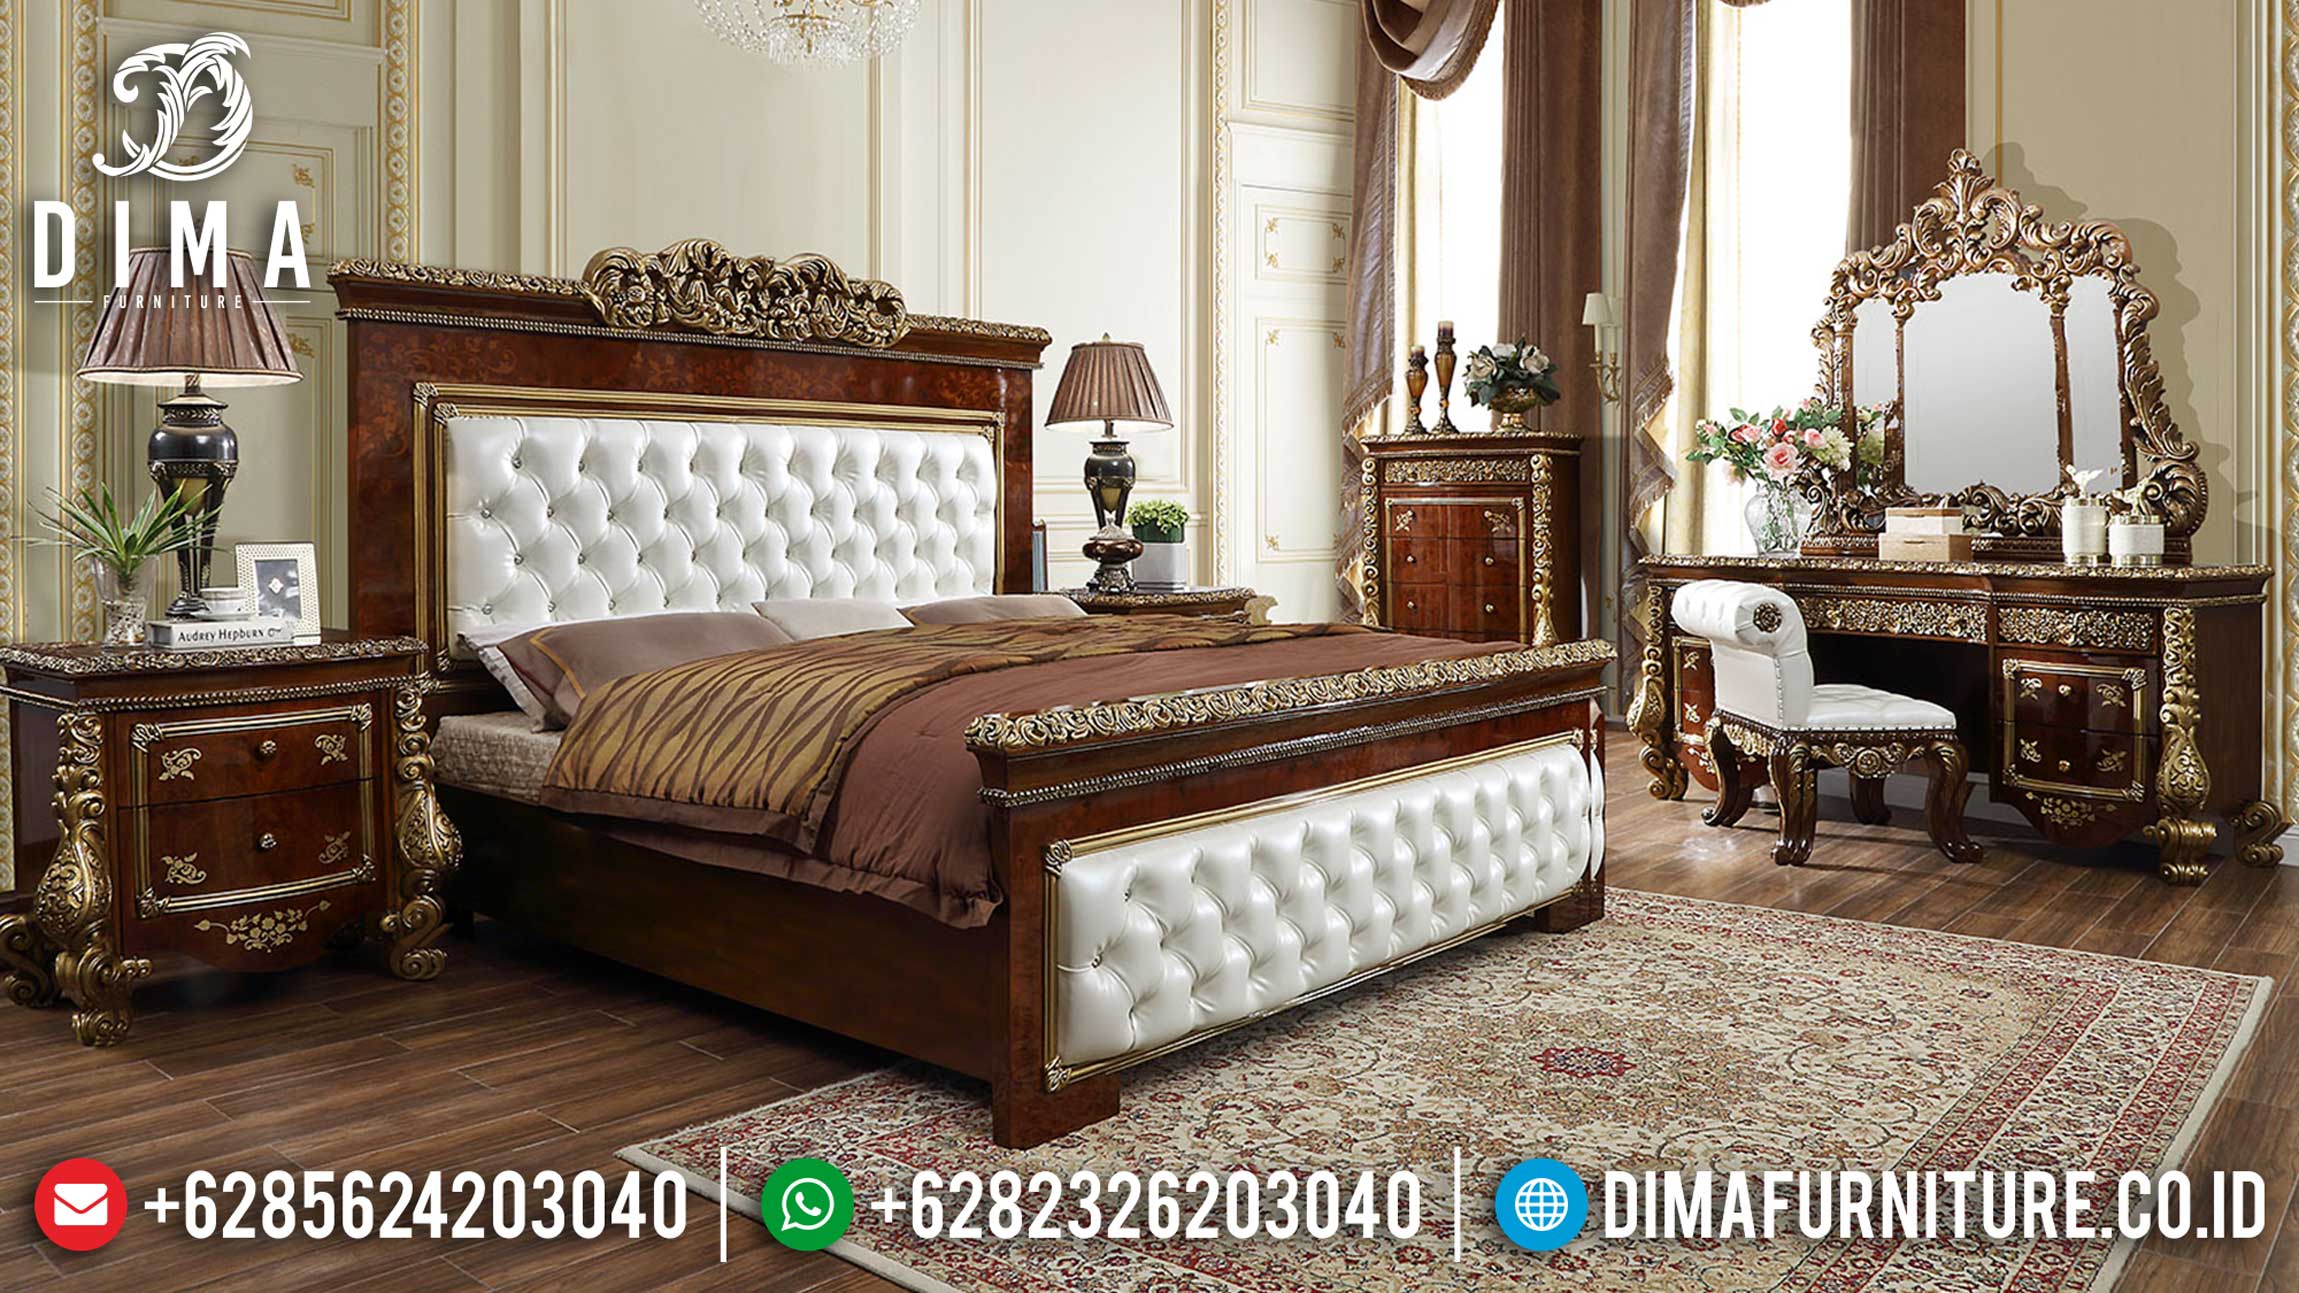 Classic Style Tempat Tidur Ukiran Jepara New Design Interior Bedroom TTJ-1106